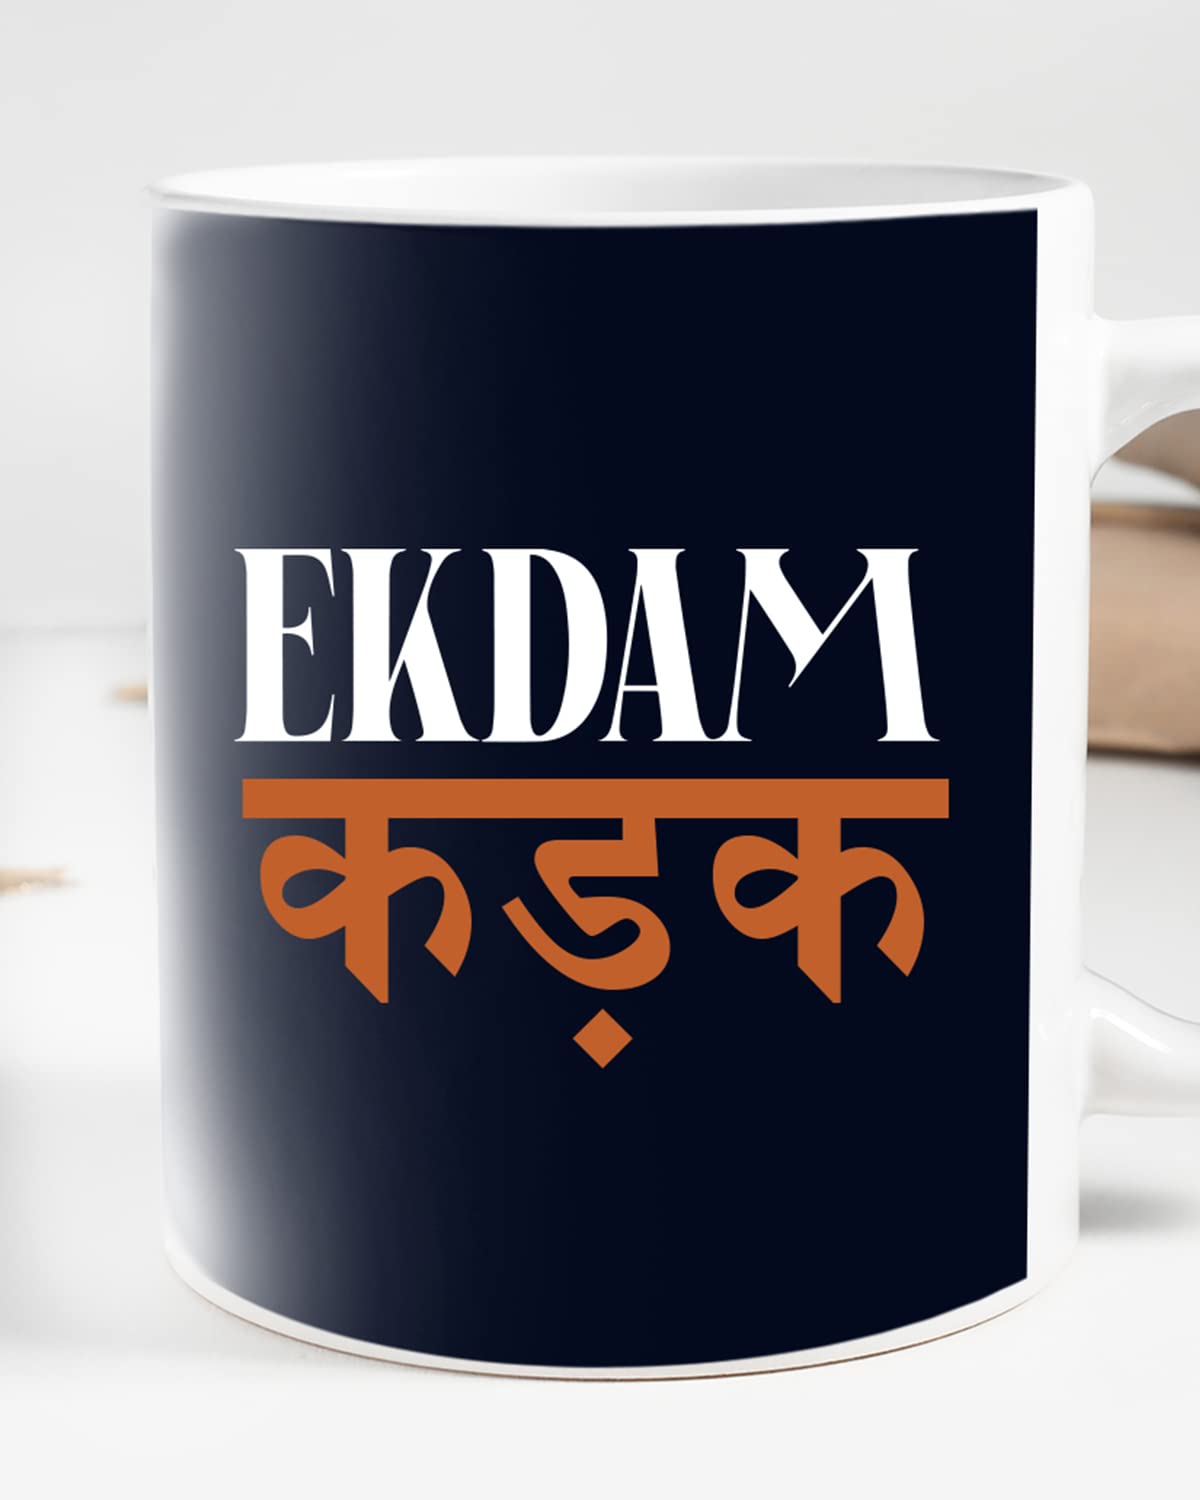 EKDAM KADAK Coffee Mug - Gift for Friend, Birthday Gift, Birthday Mug, Sarcasm Quotes Mug, Mugs with Funny & Funky Dialogues, Bollywood Mugs, Funny Mugs for Him & Her